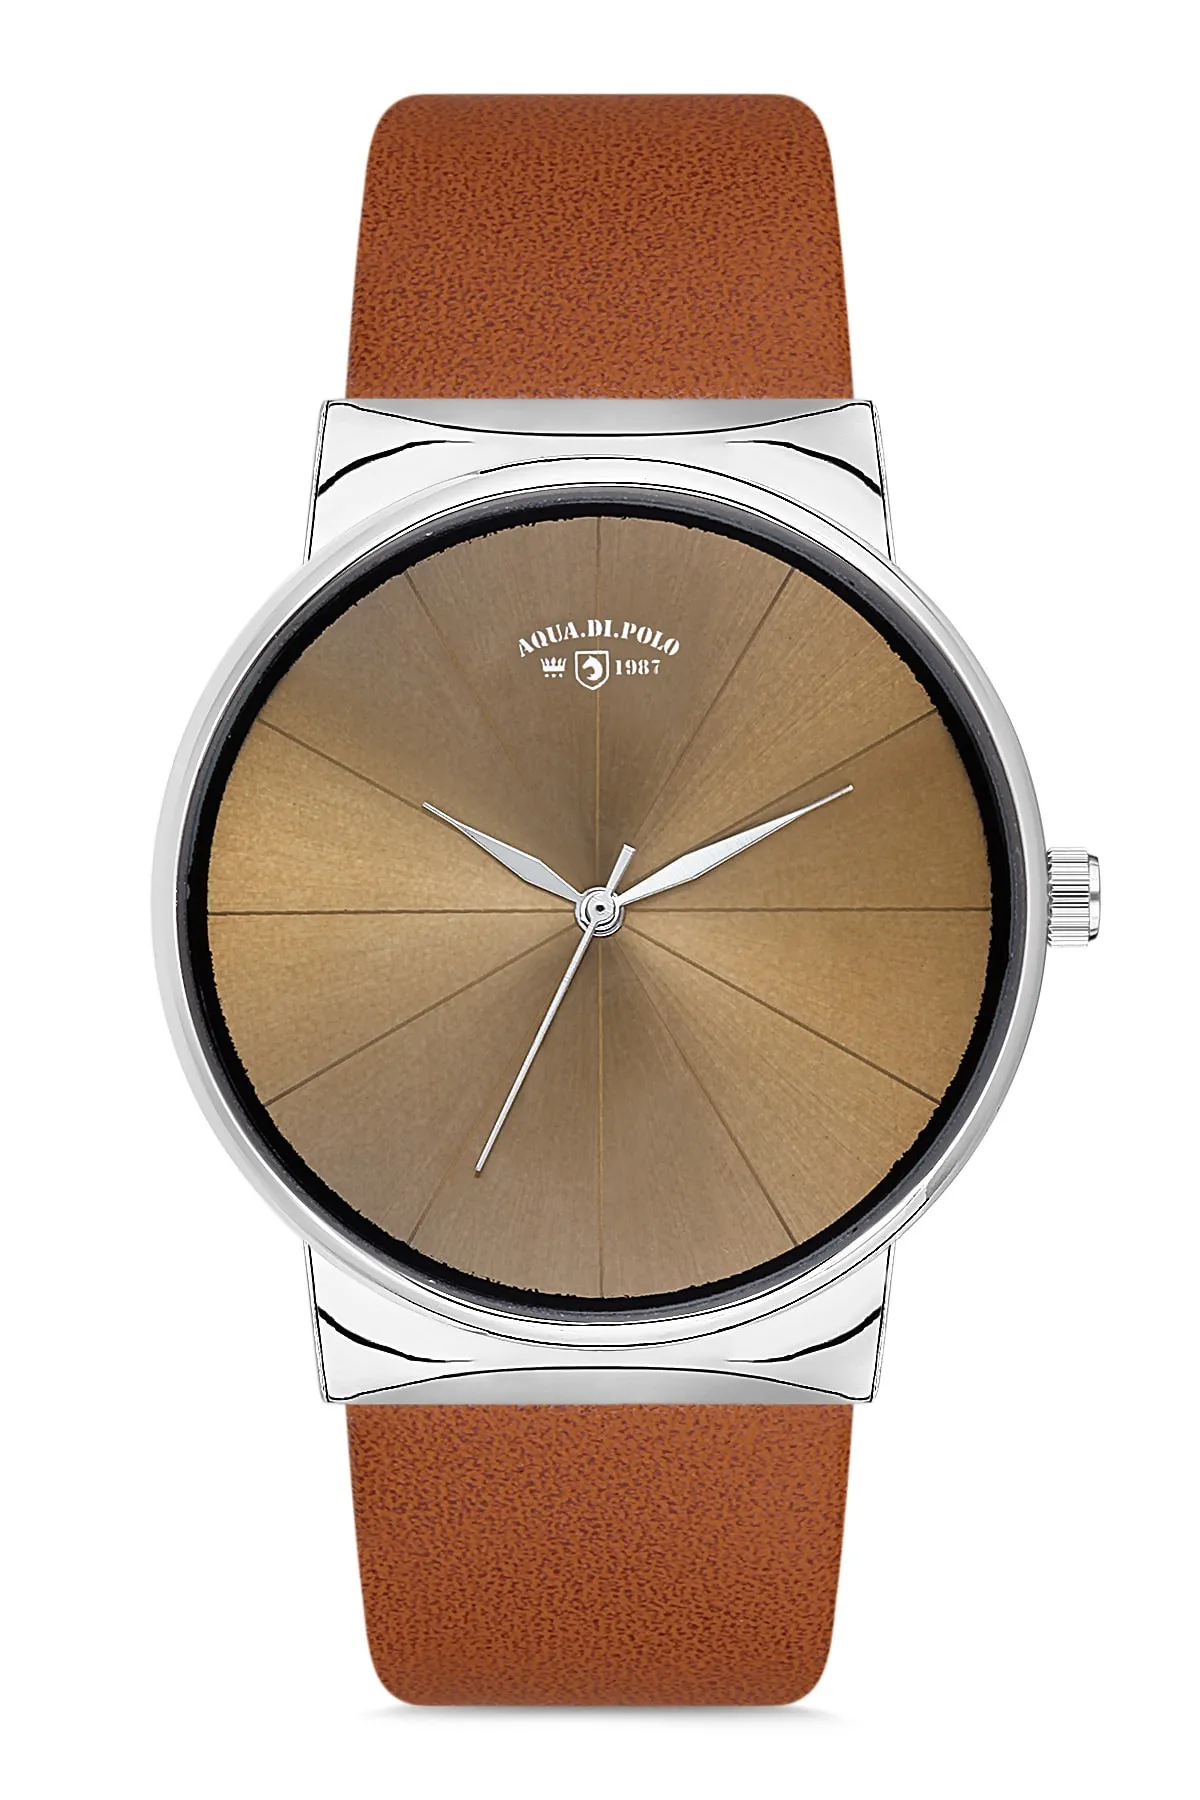 Кожаные наручные часы унисекс Di Polo apwa028803#1